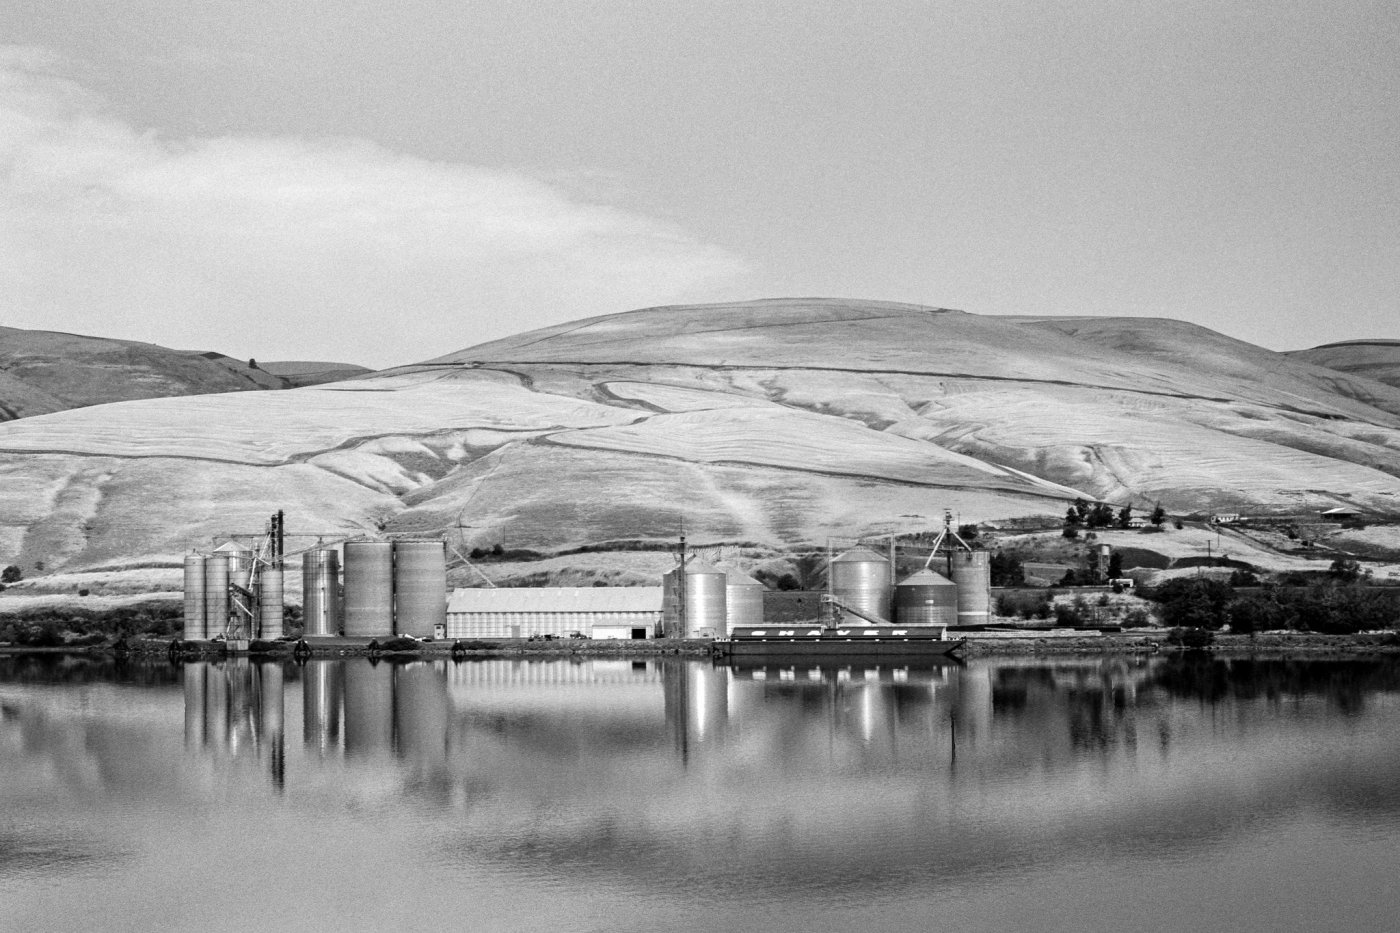 Black and white photo by ‏@jefferydross Aug 10 "Wheat Barge" Snake River, Washington Leica M6 @ILFORDPhoto fp4+